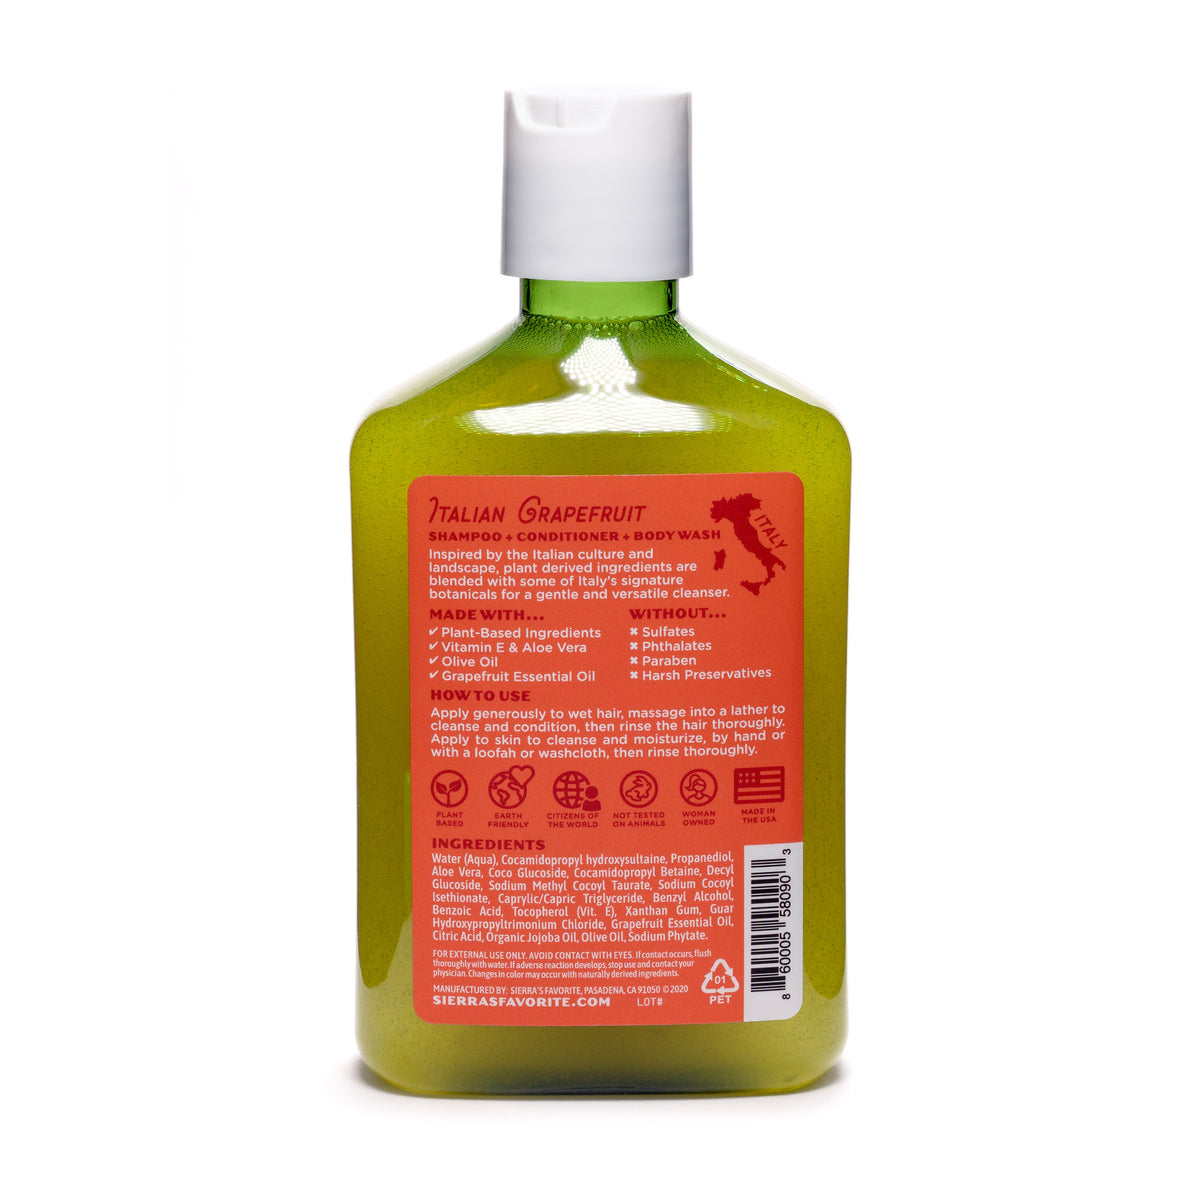 Italian Grapefruit (3-in-1) Shampoo &amp; Body Wash (12 oz)